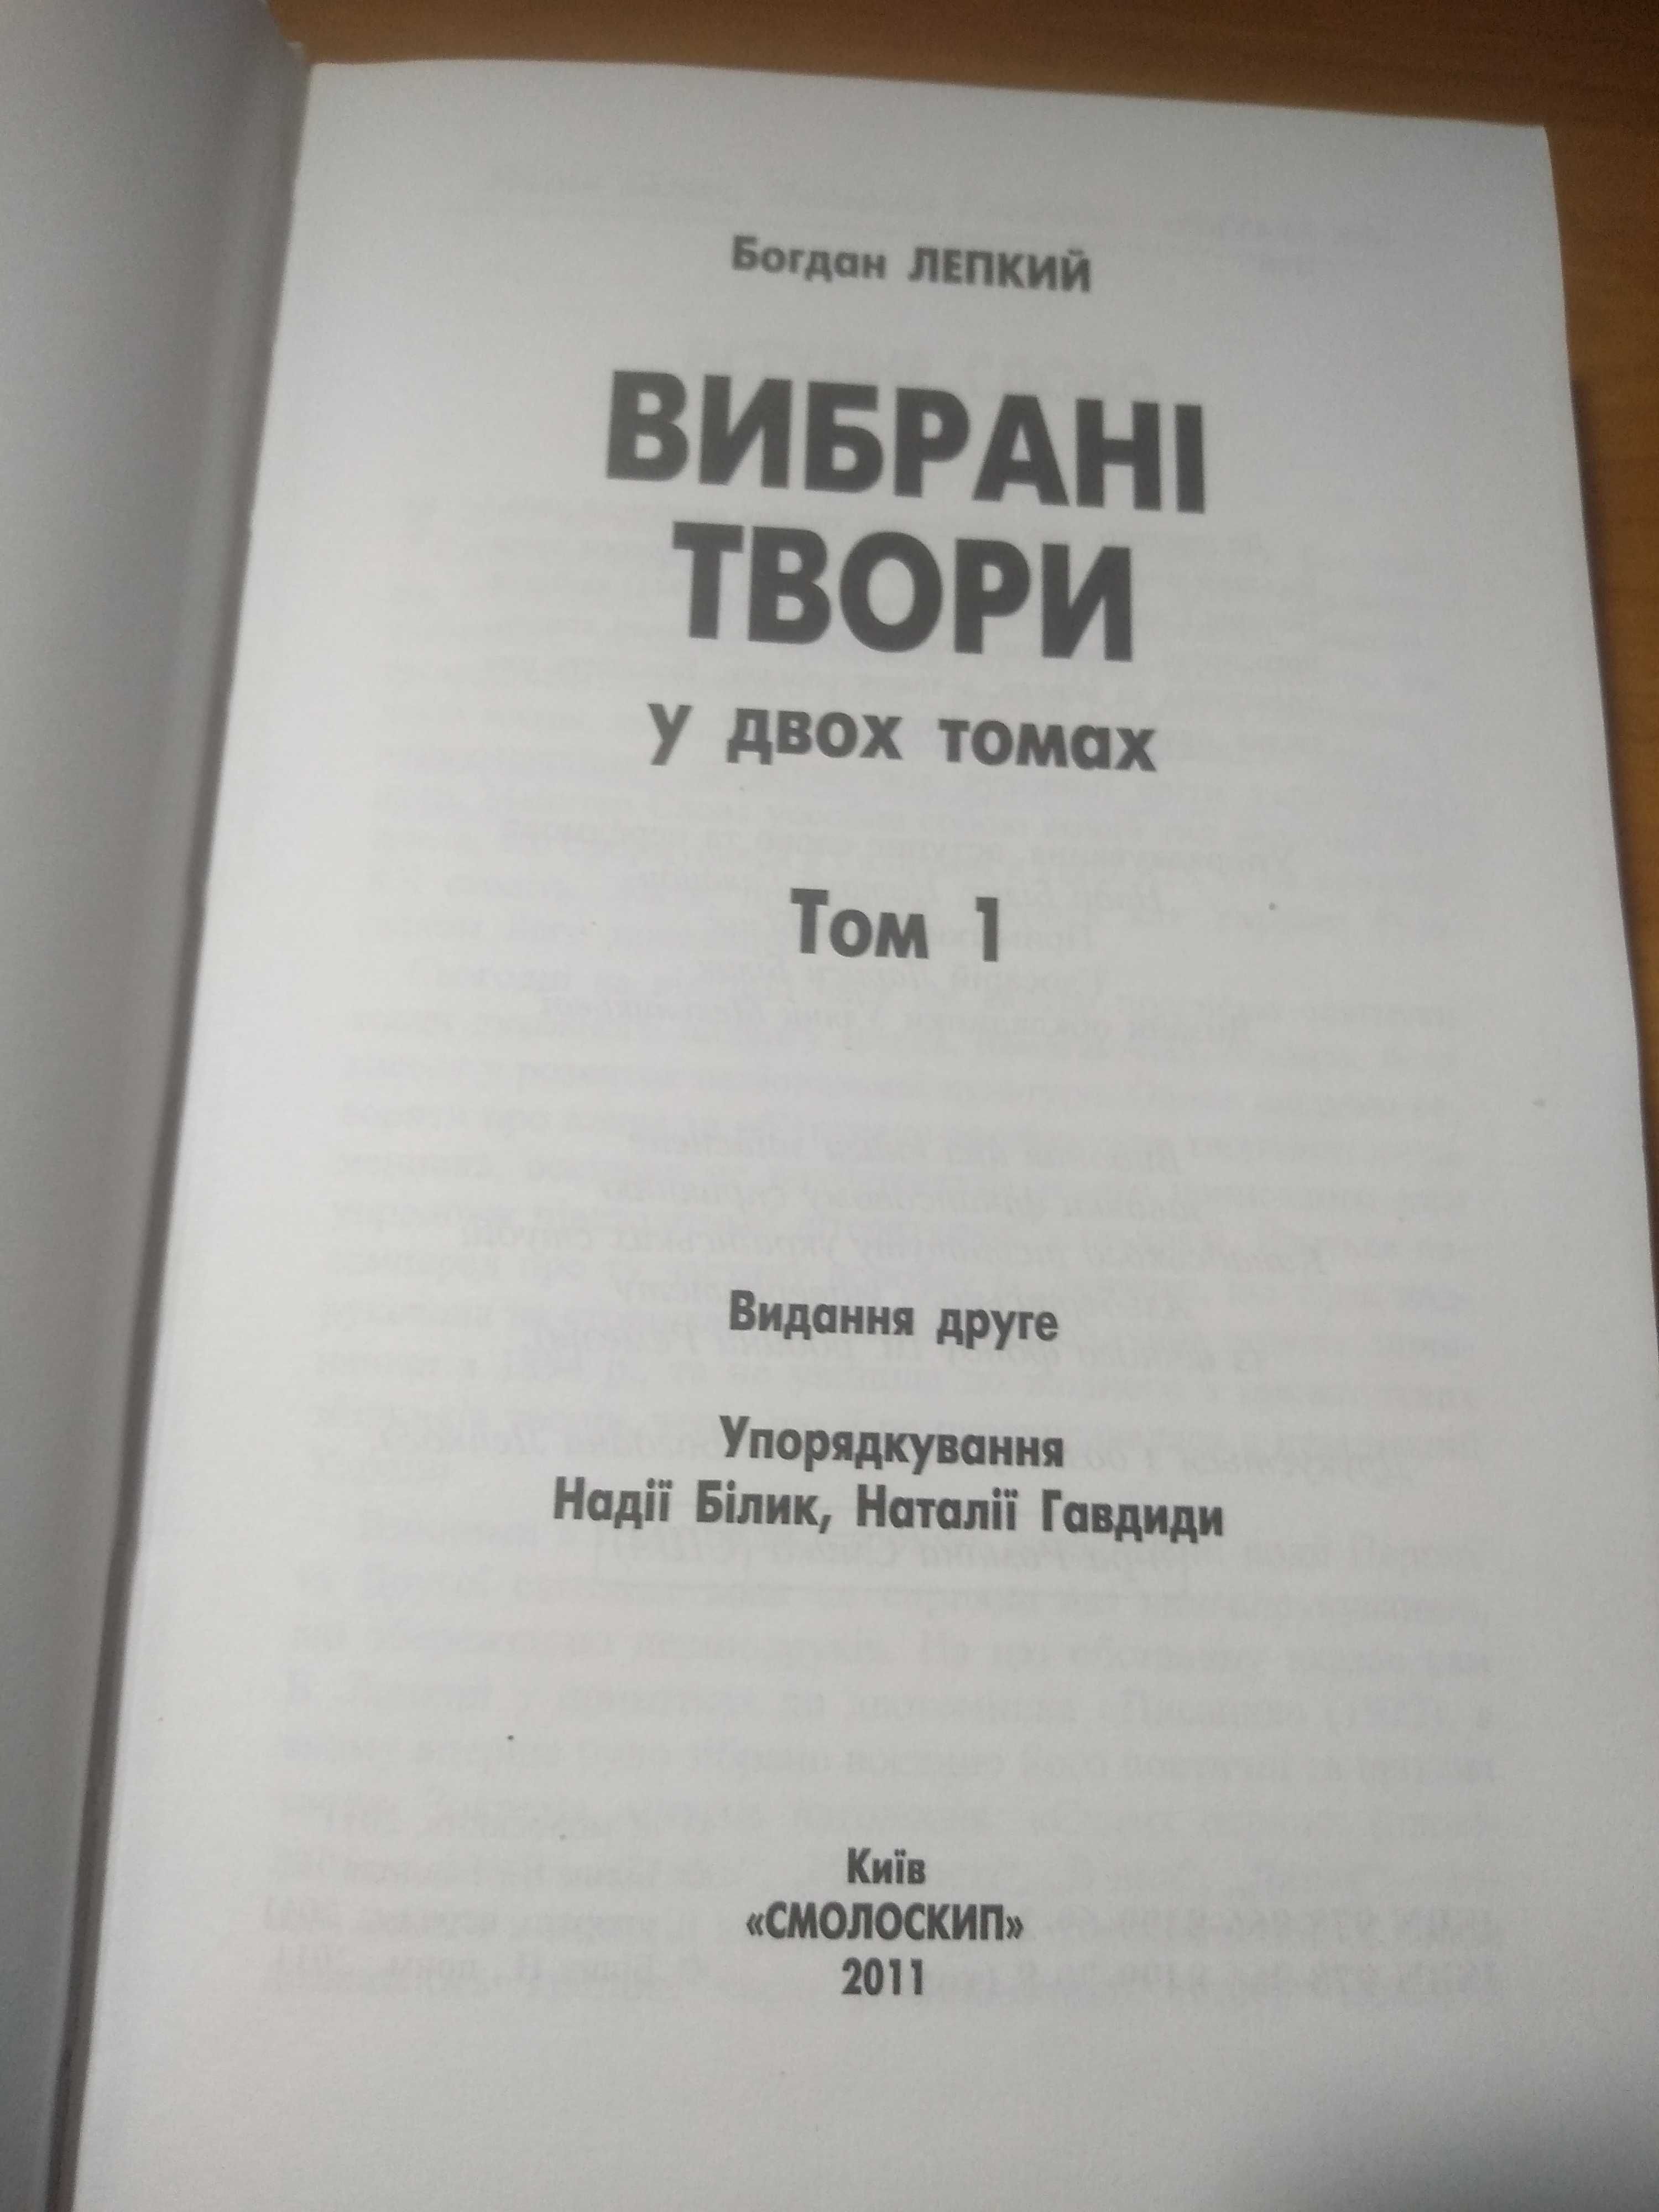 Книги Богдана Лепкого. Сказки. Повести